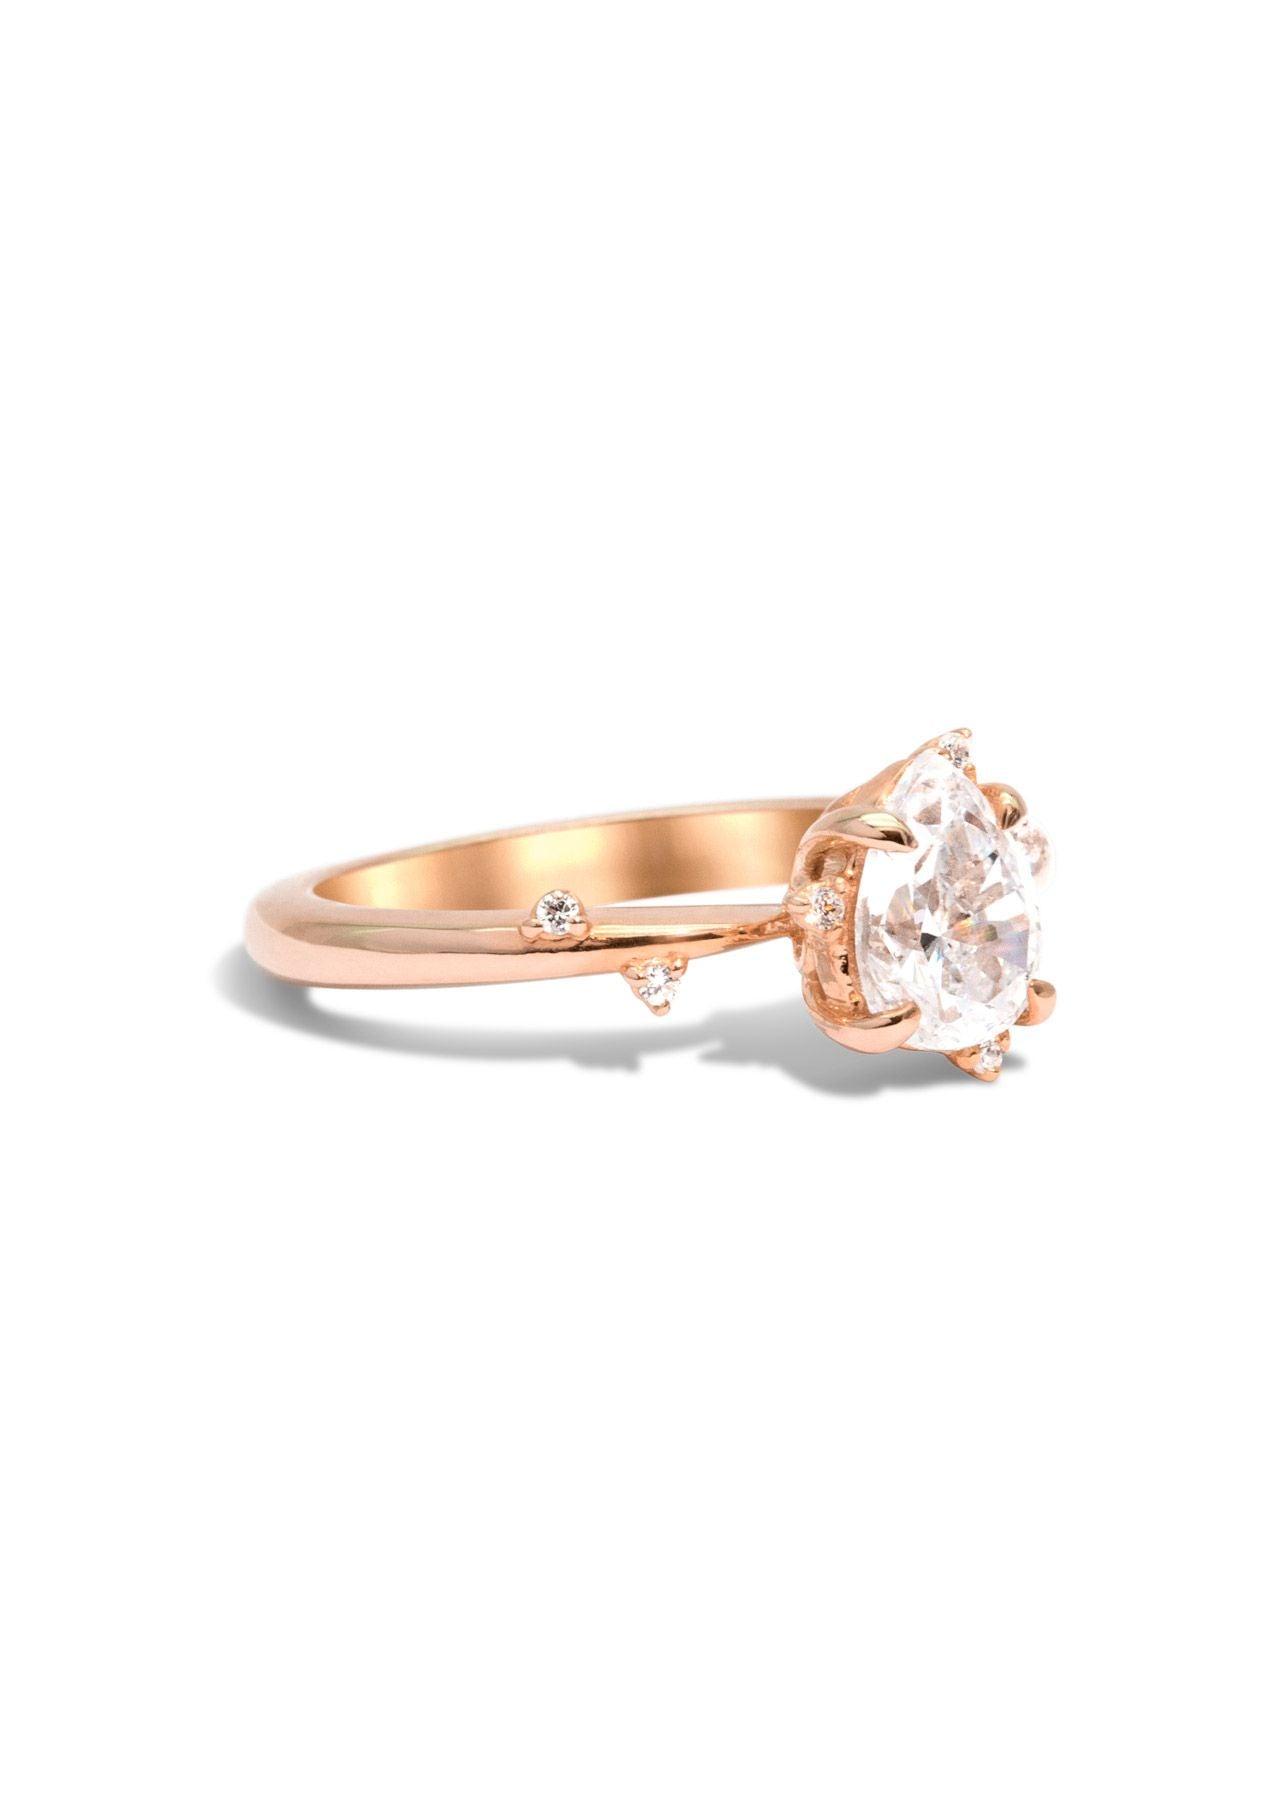 The Juniper Rose Gold Cultured Diamond Ring